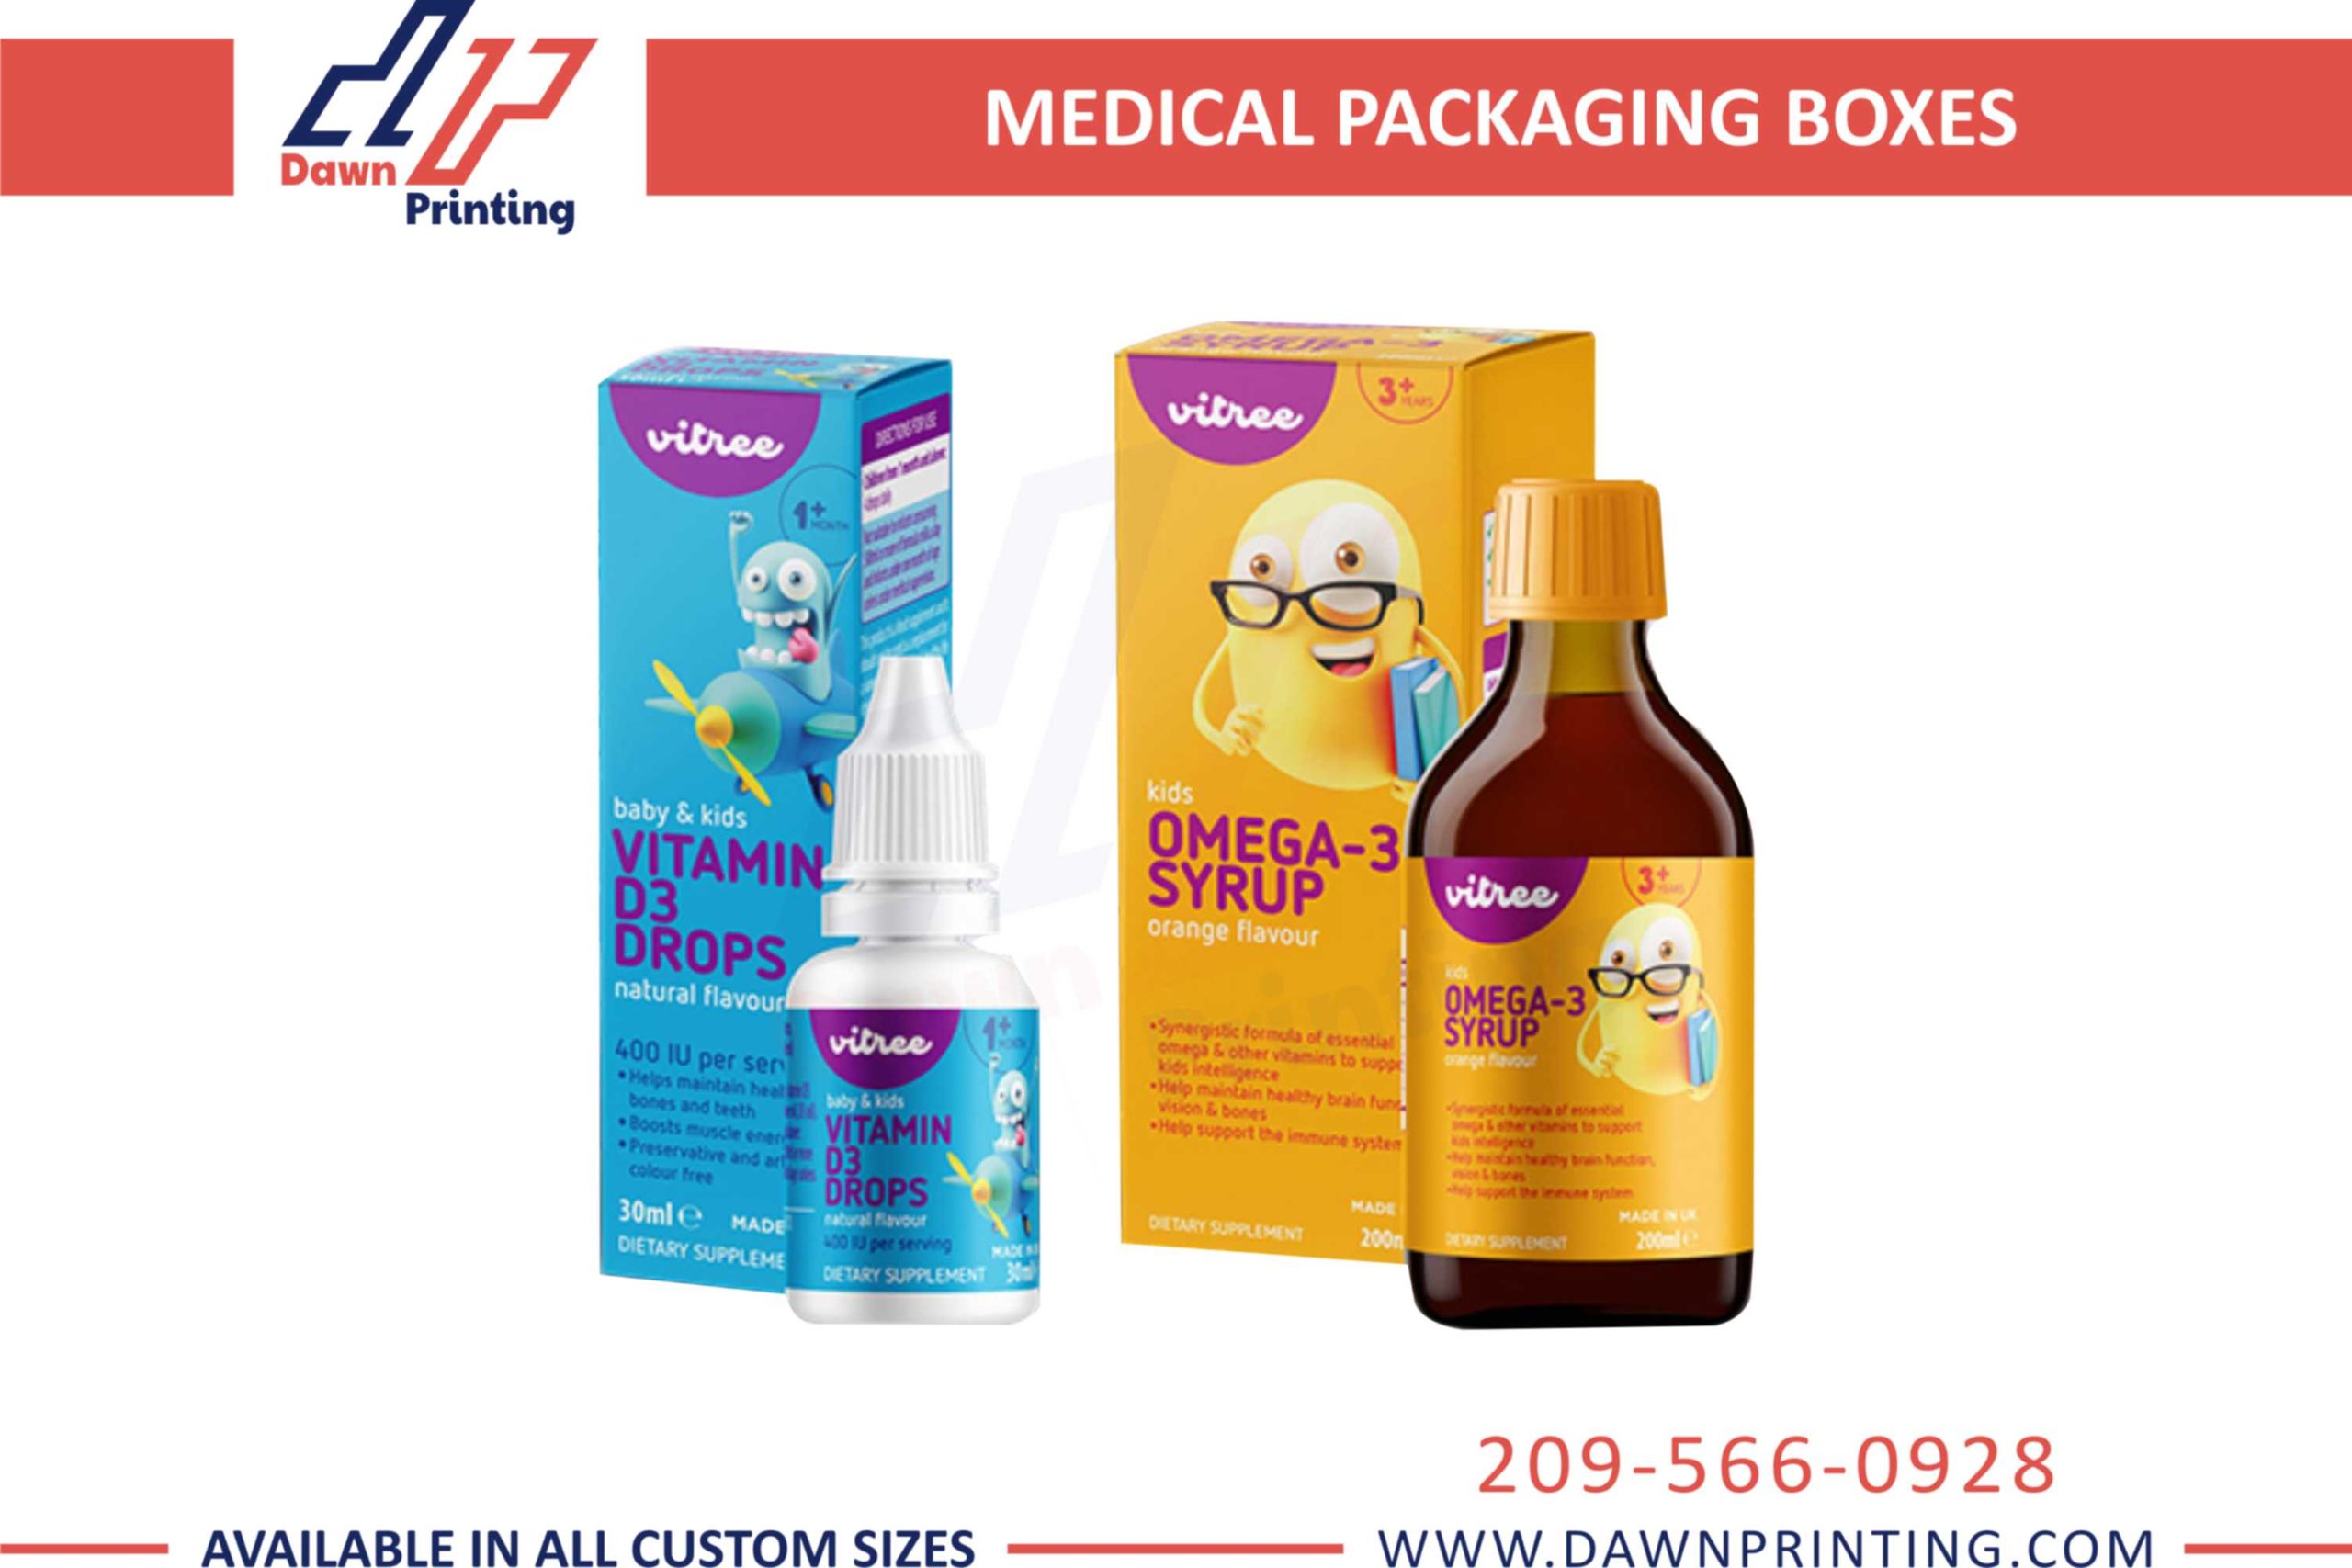 Medical Packaging & Printing Boxes - Dawn Printing